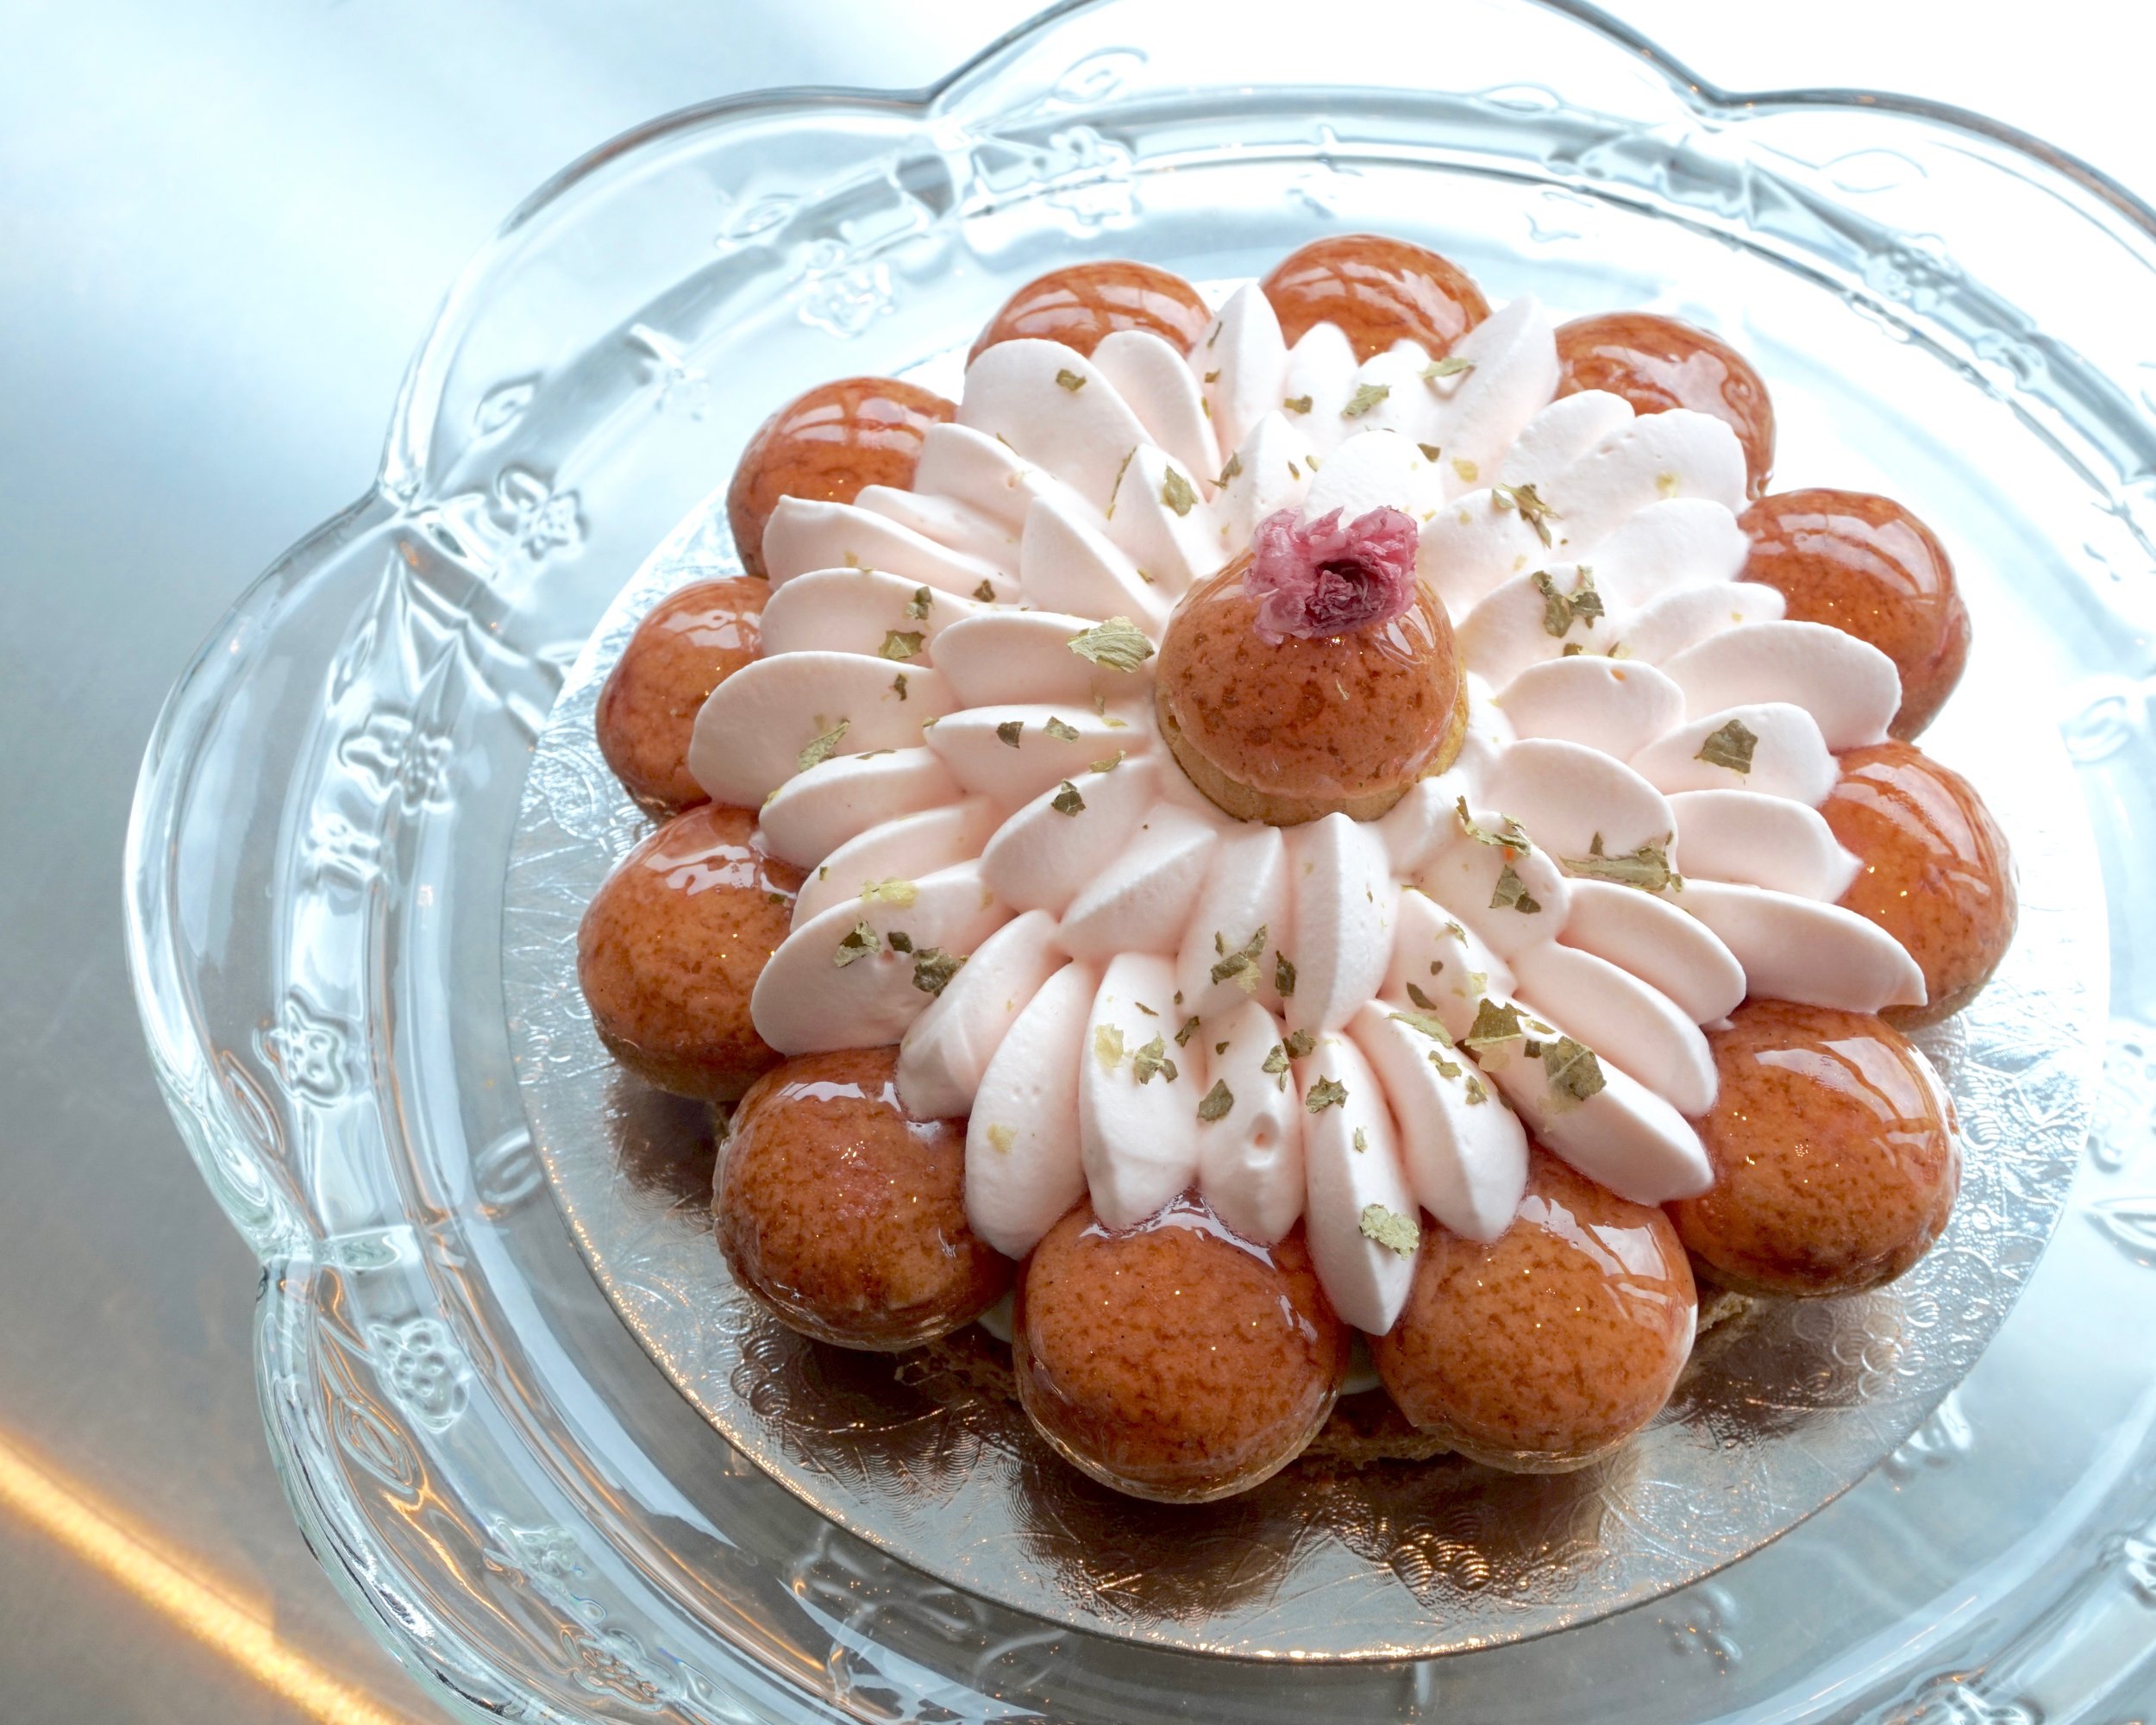 Sakura saint honore cake made by Gusta Cooking Studio